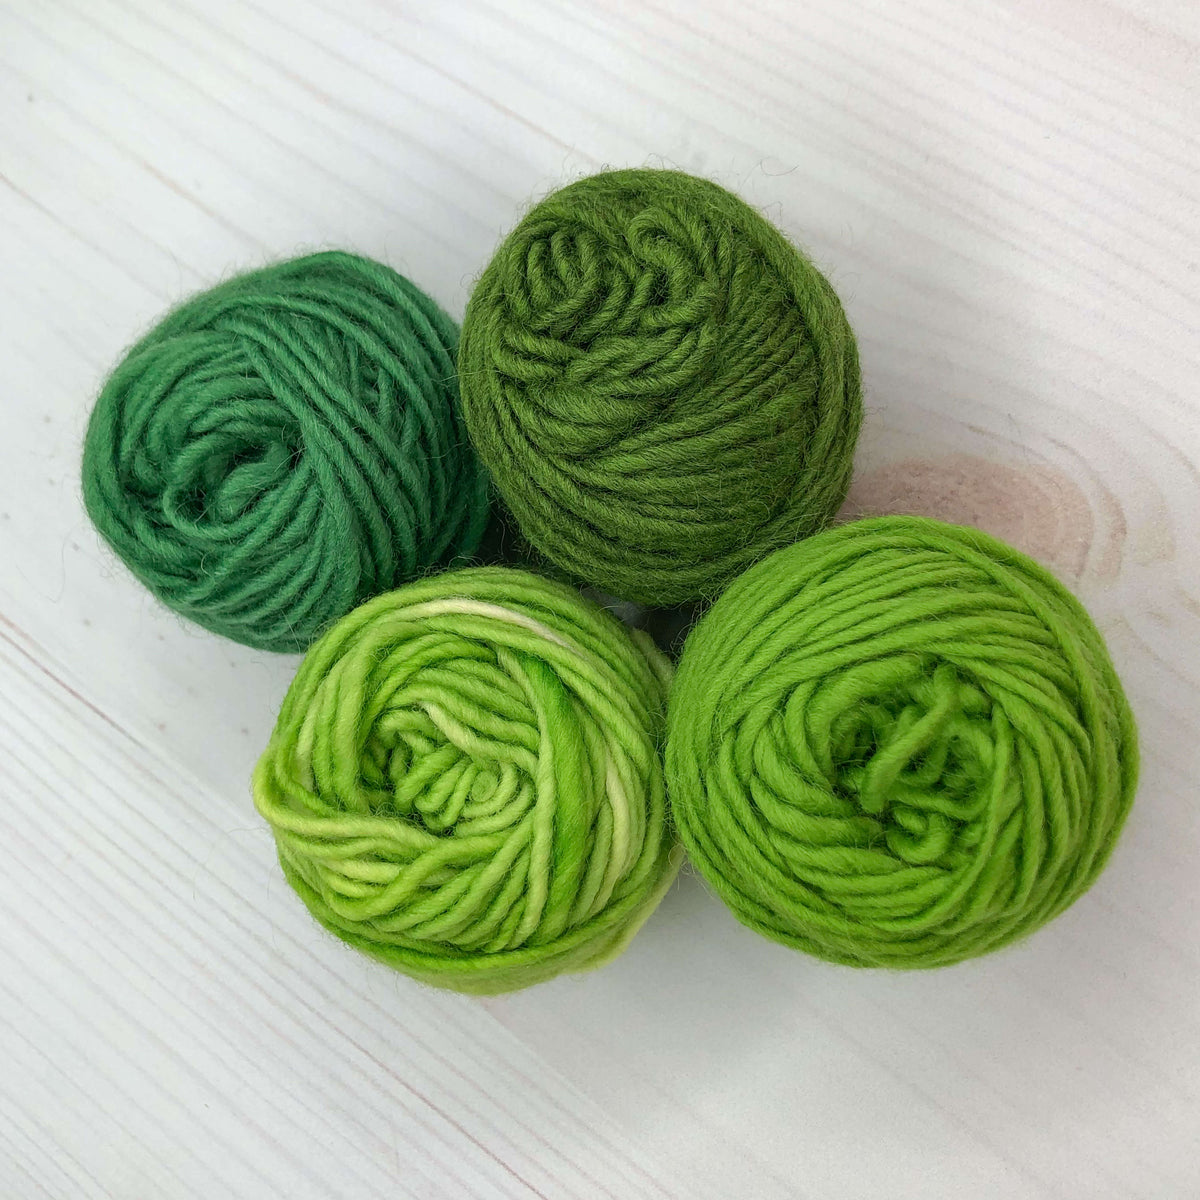 Wool Yarn Kit - Colors of the Meadow